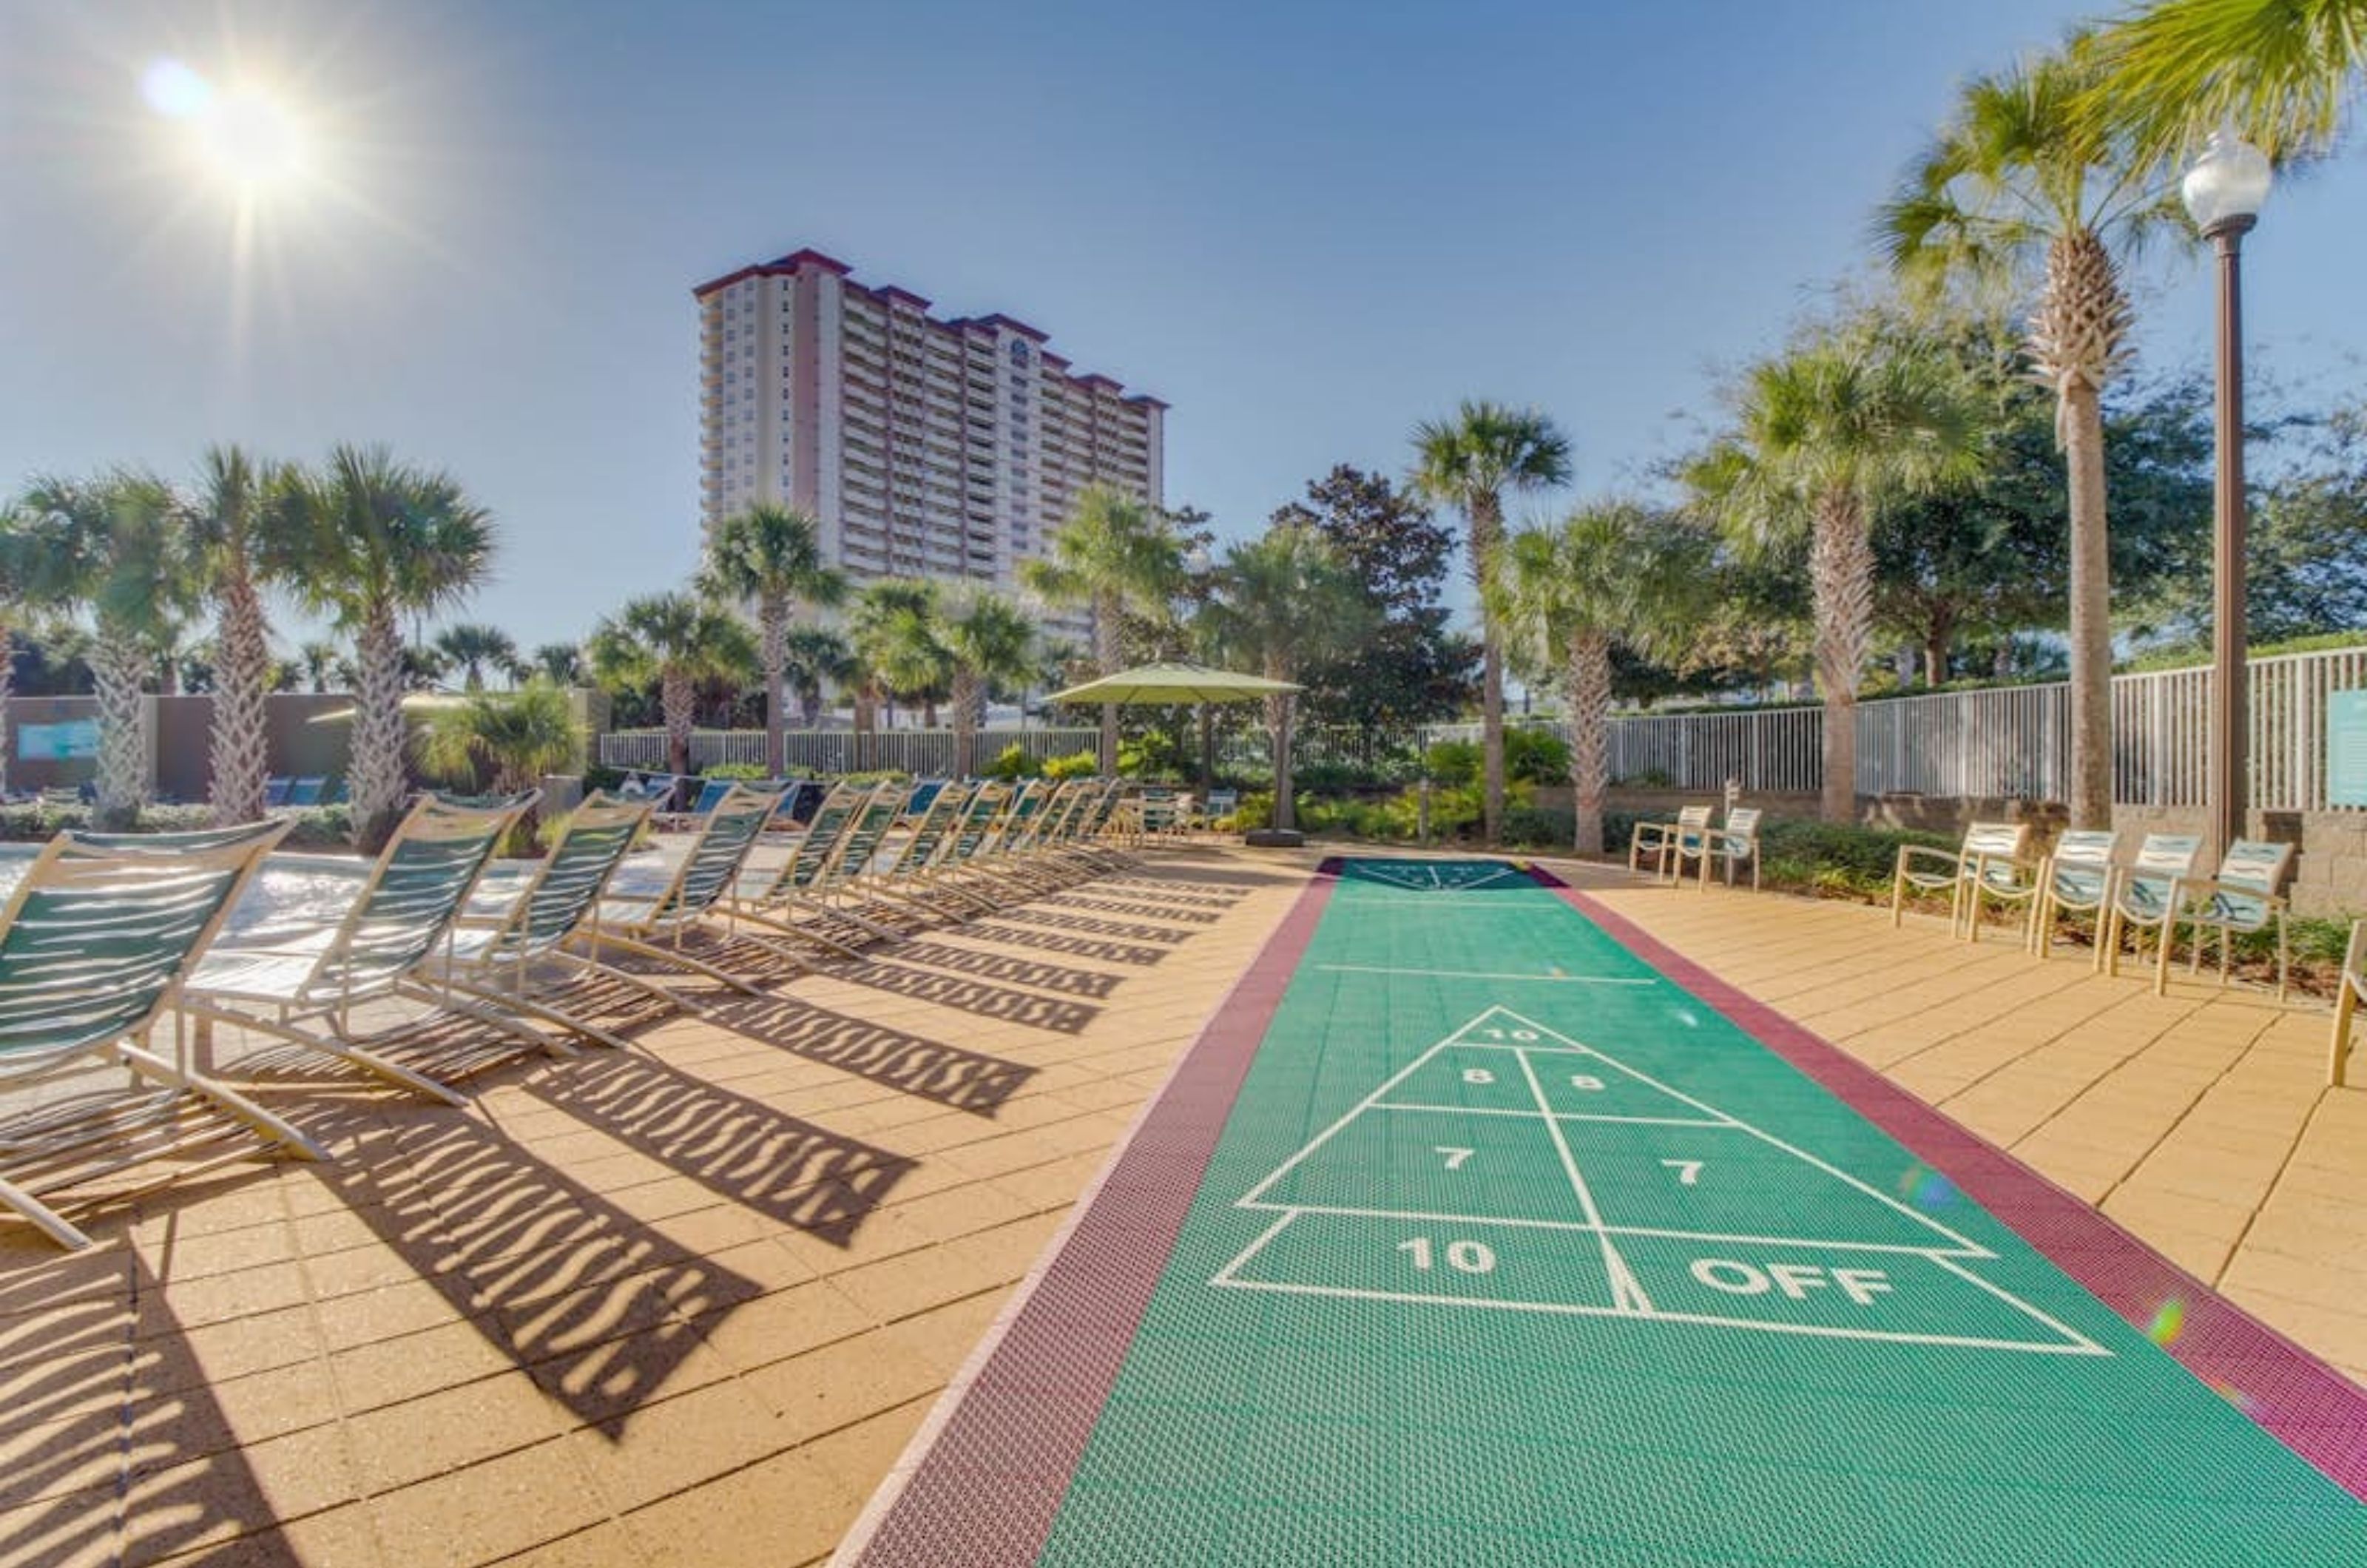 The outdoor shuffleboard court at Emerald Beach Resort in Panama City Beach Florida 